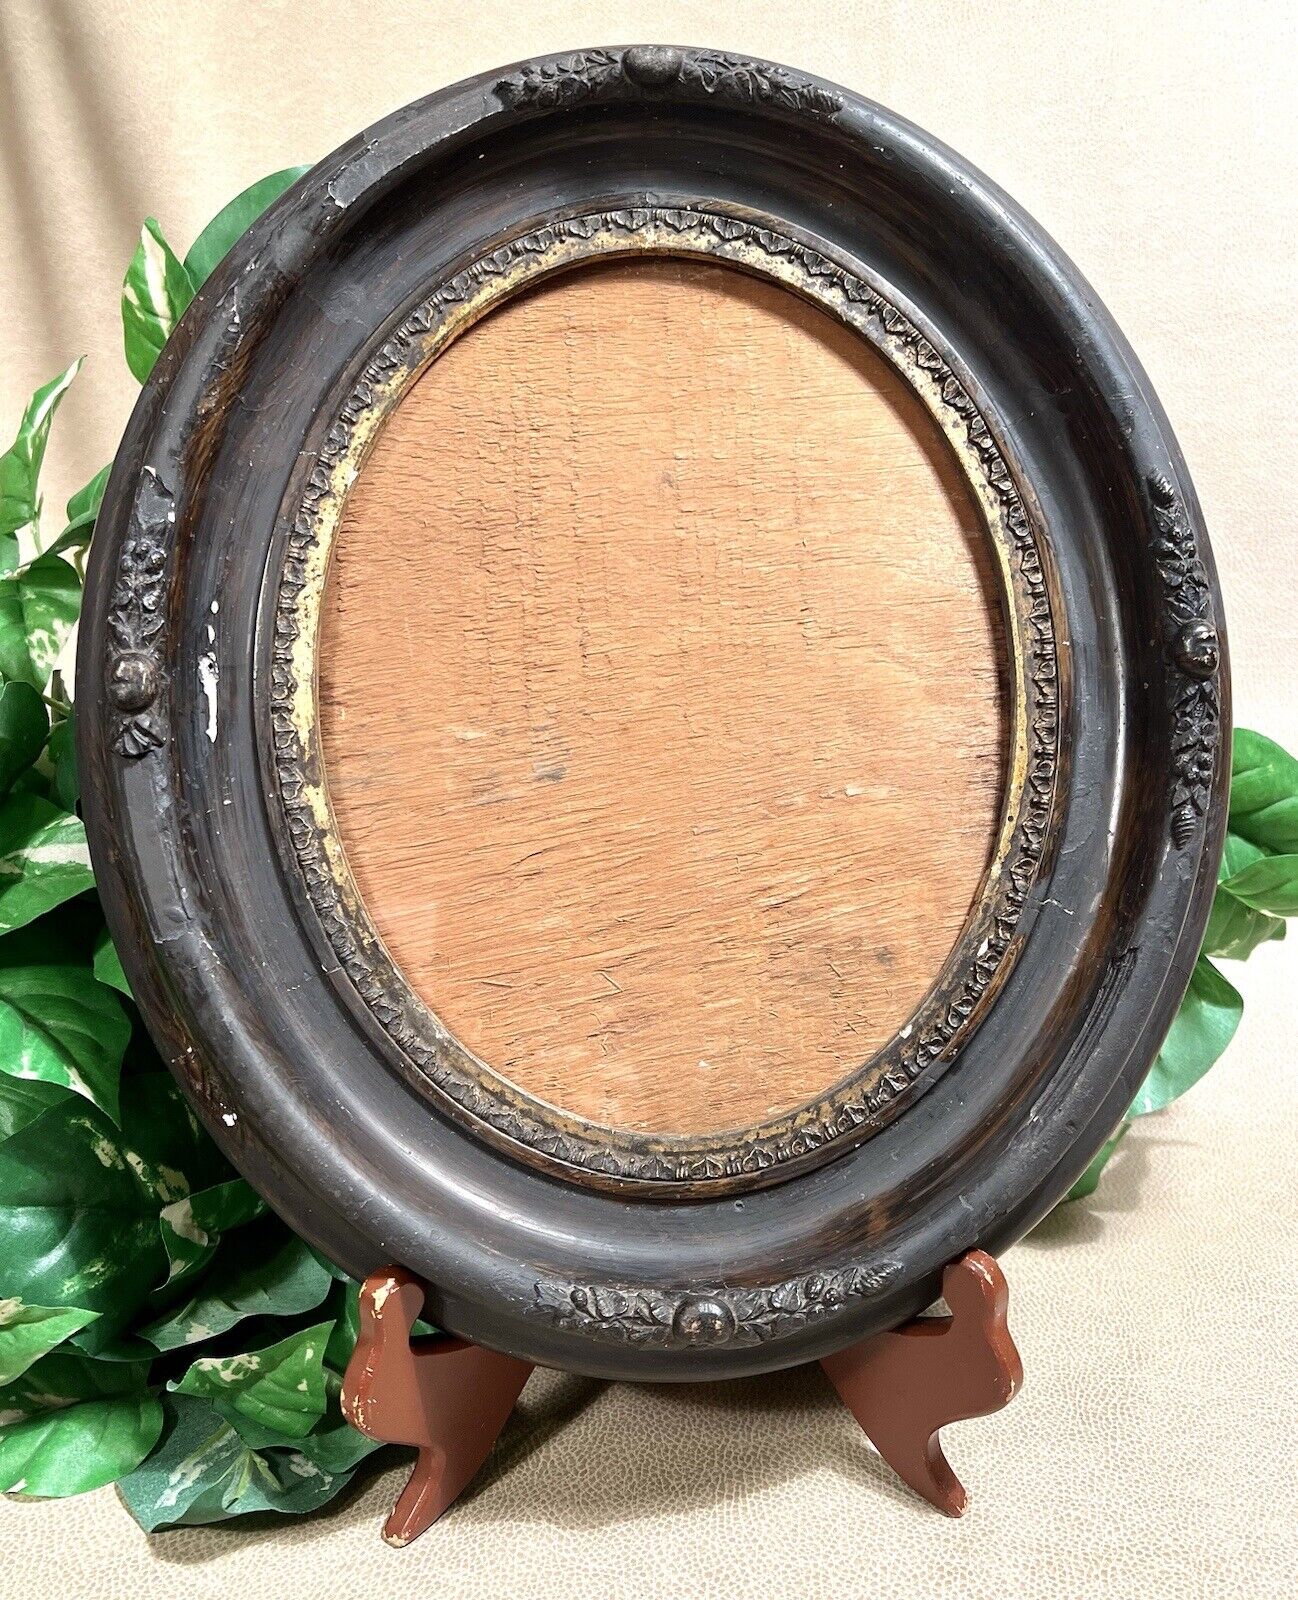 Antique Gesso Gilded Oval Frame w/ Fruit & Leaf Decor/Borders - New Glass